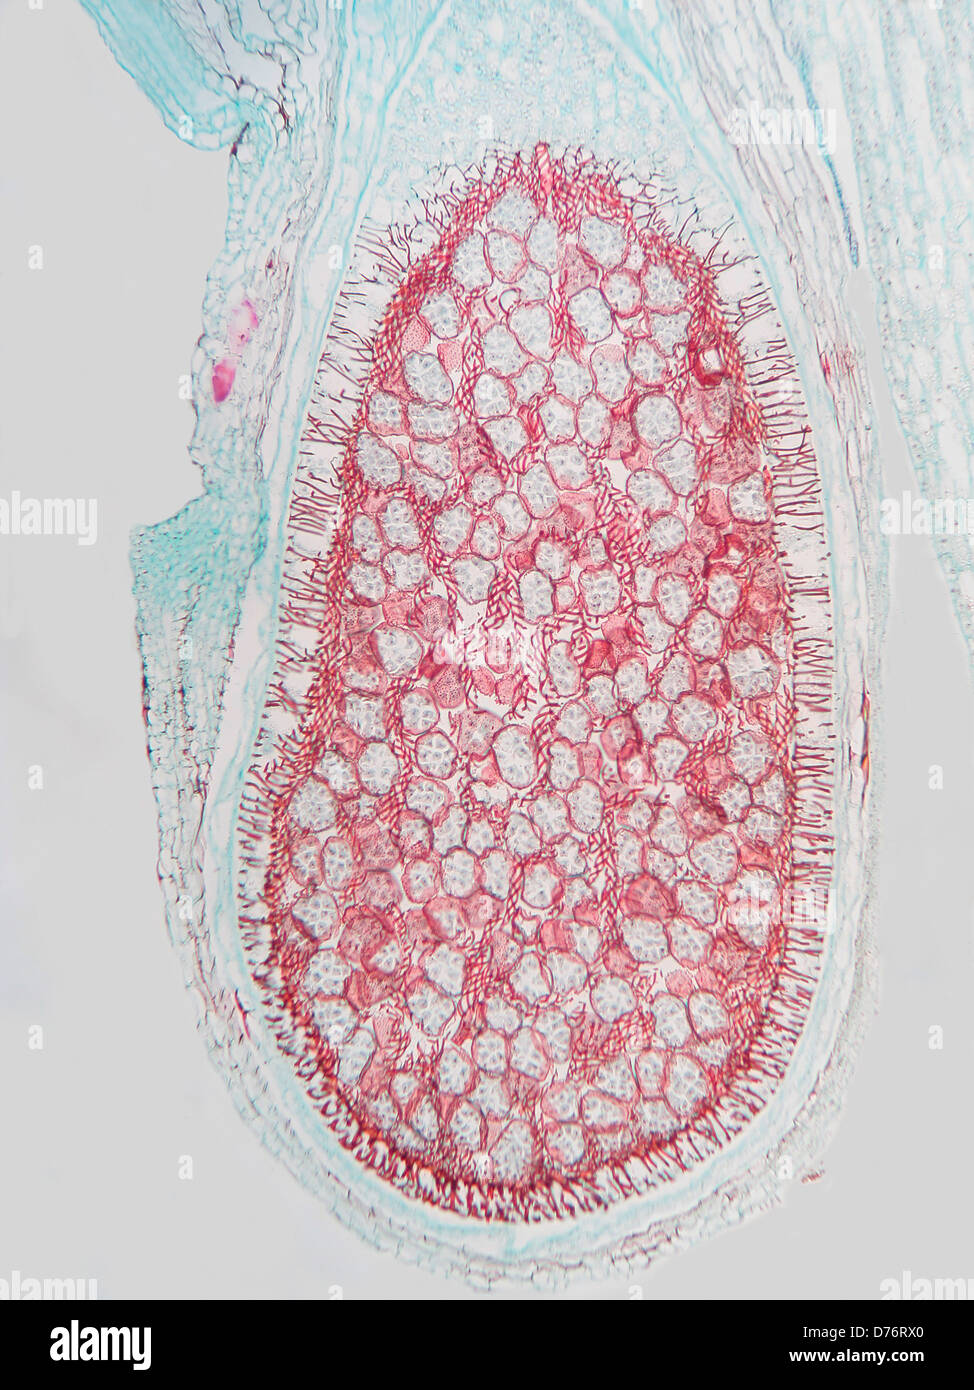 Liverwort Conocphalum sporophyte magnification 100x Stock Photo